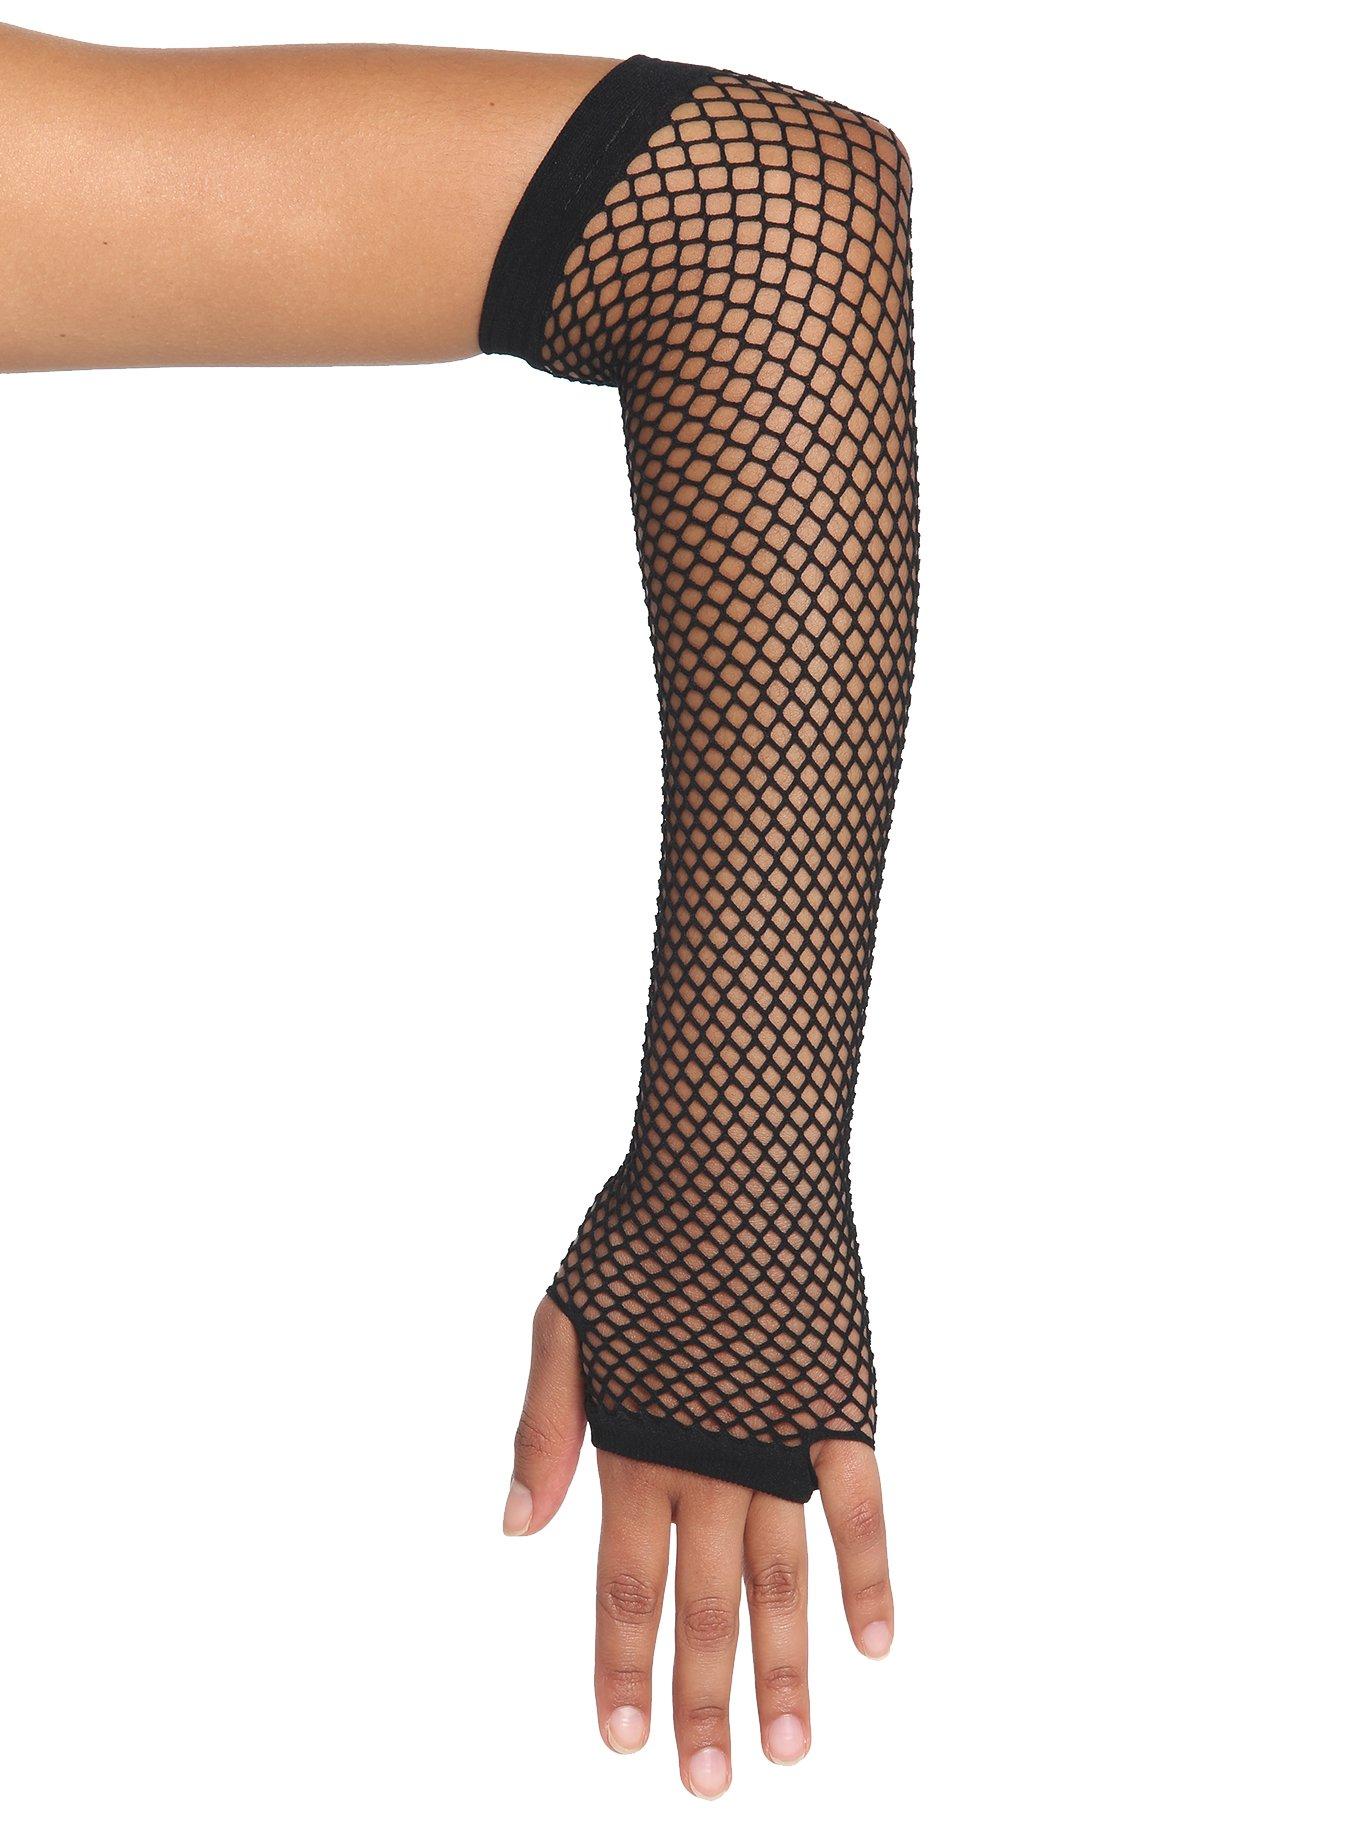 Black Fishnet Fingerless Arm Warmers, , hi-res